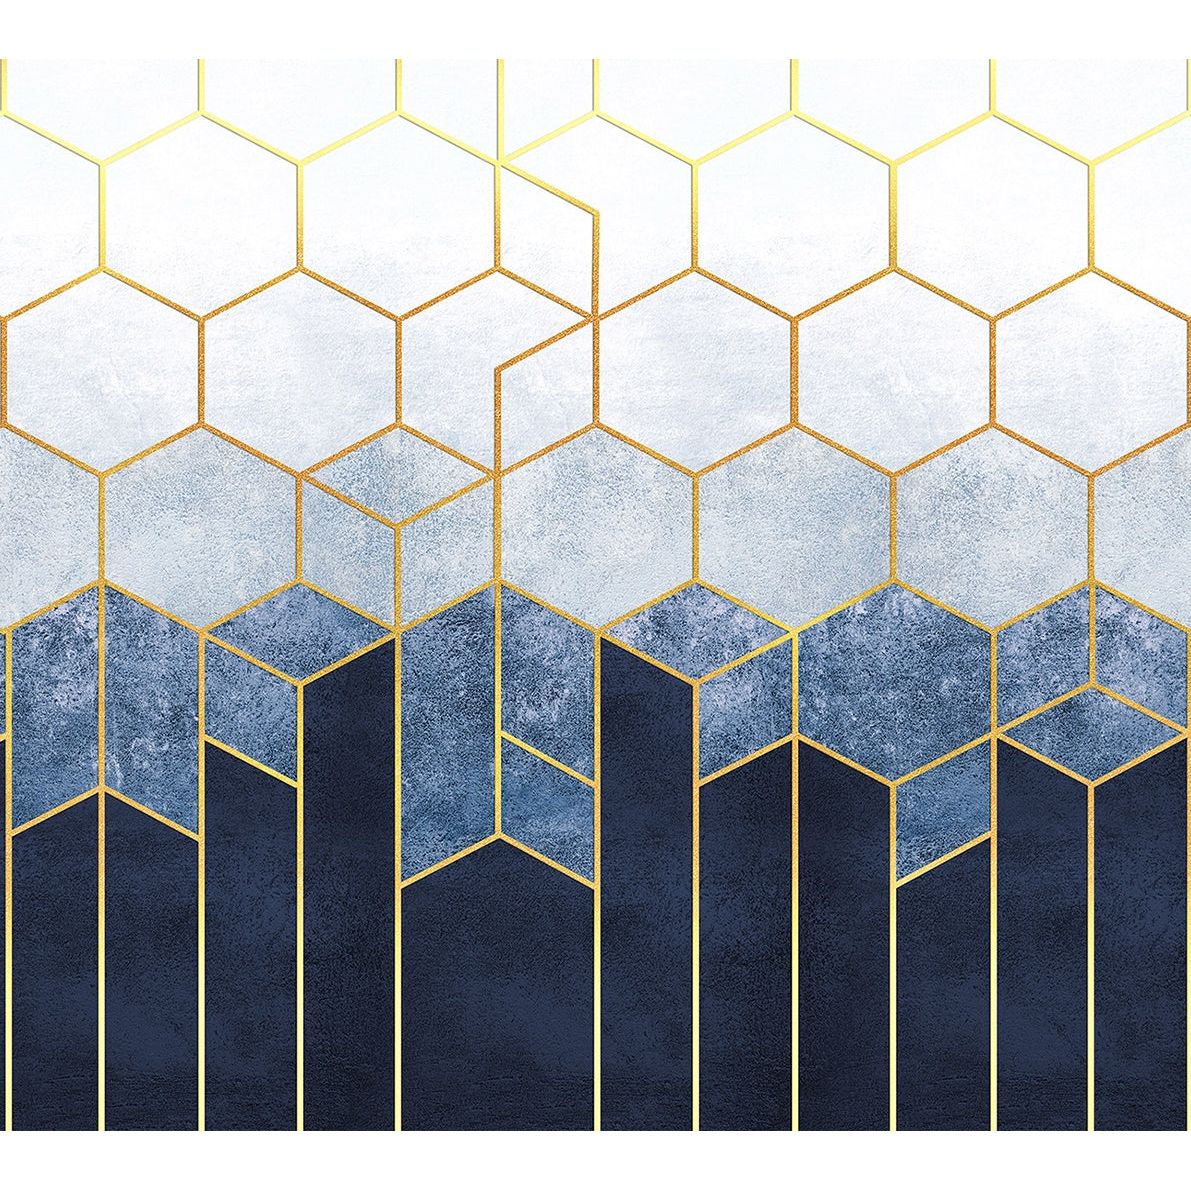 Honeycomb Golden Harmony: Geometric Wall Mural